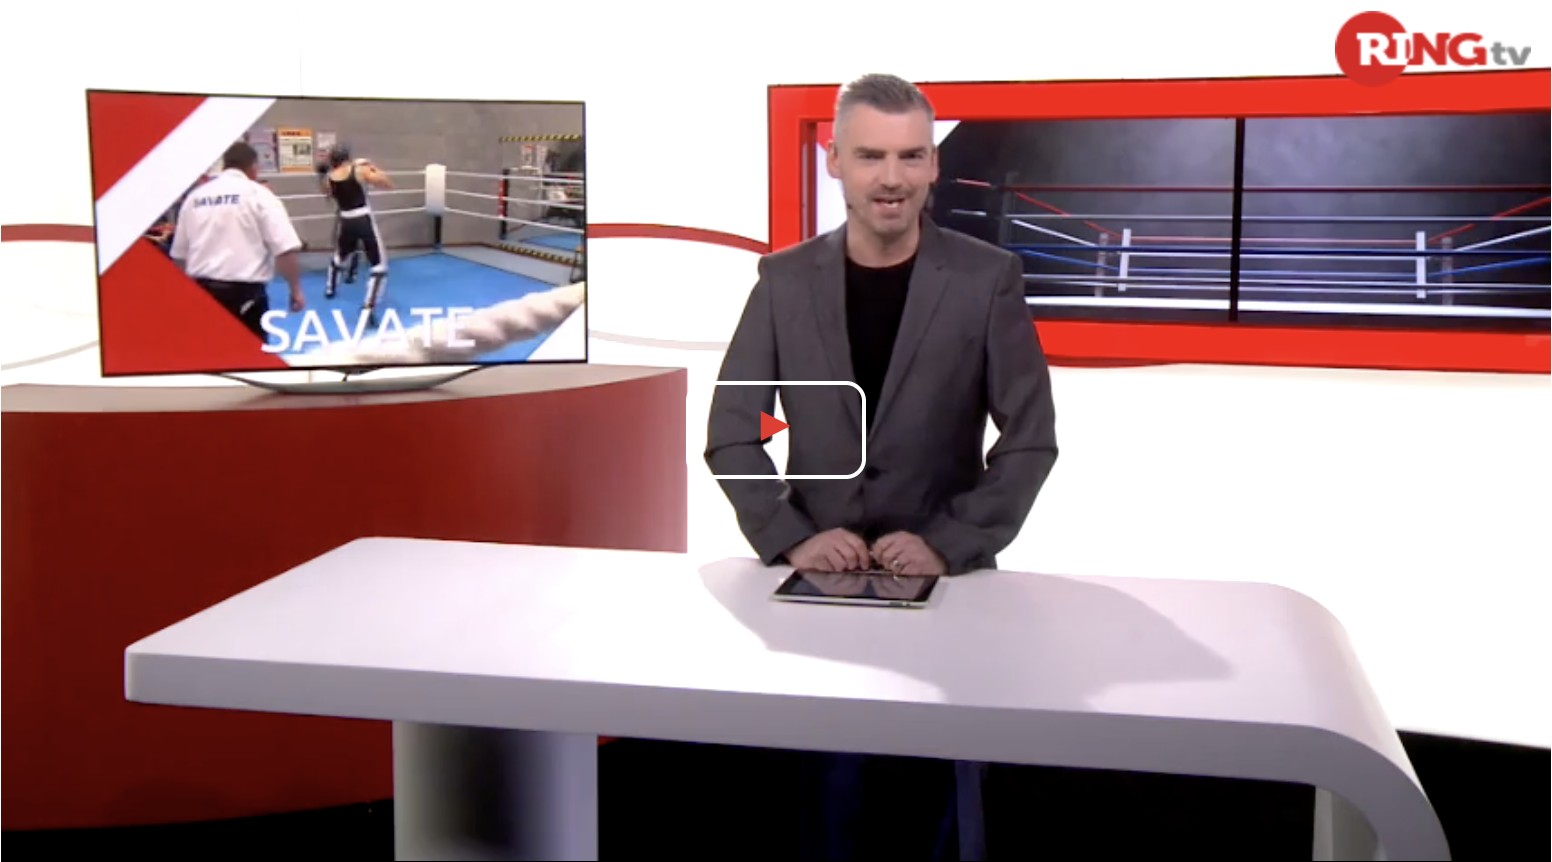 video ringtv savate boxing club zemst